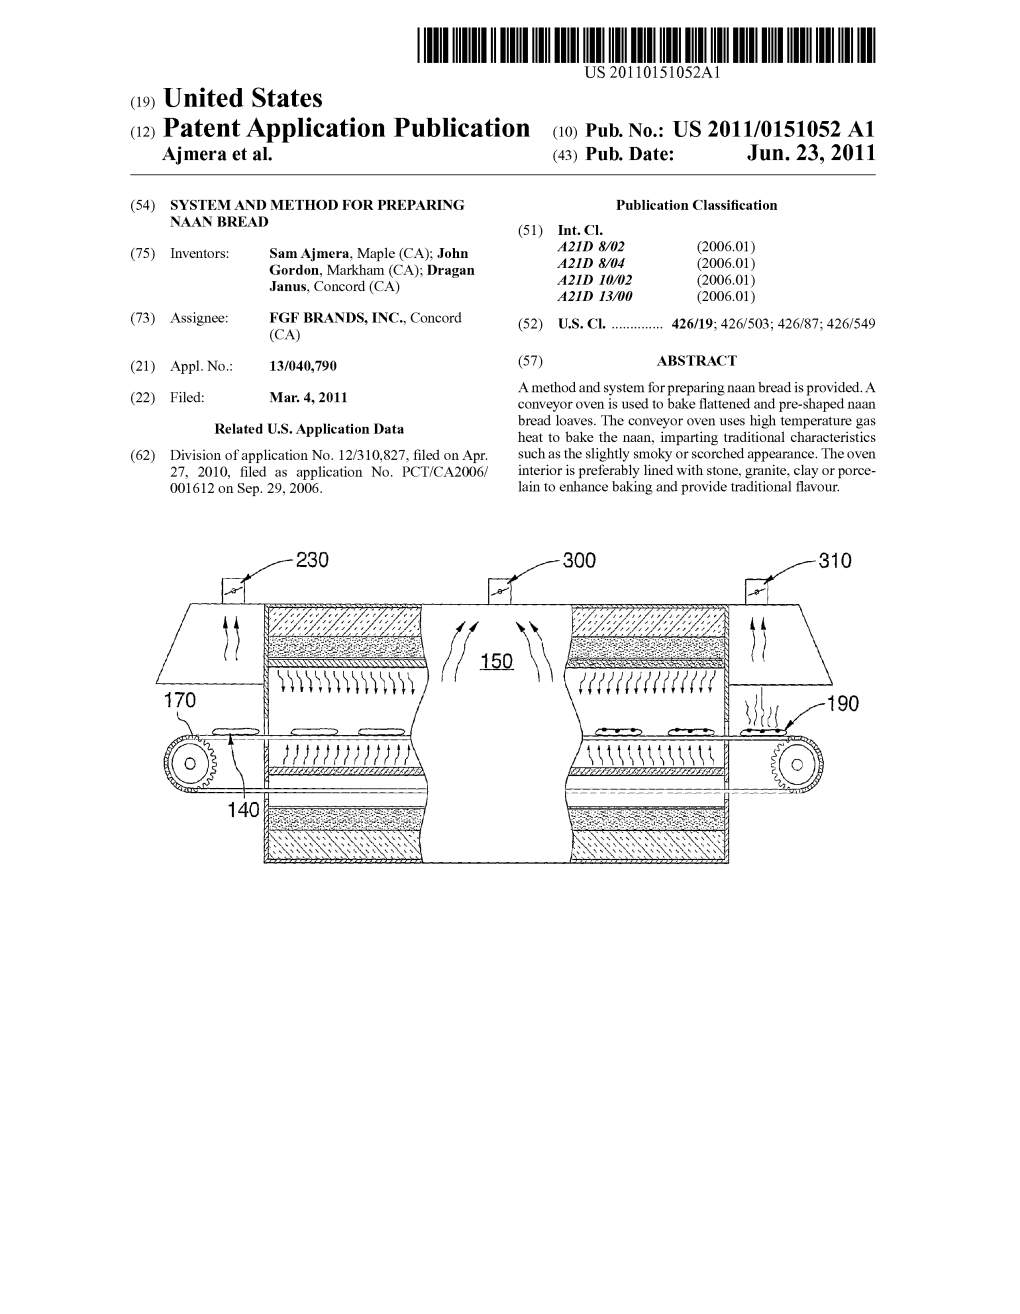 (12) Patent Application Publication (10) Pub. No.: US 2011/0151052 A1 Ajmera Et Al